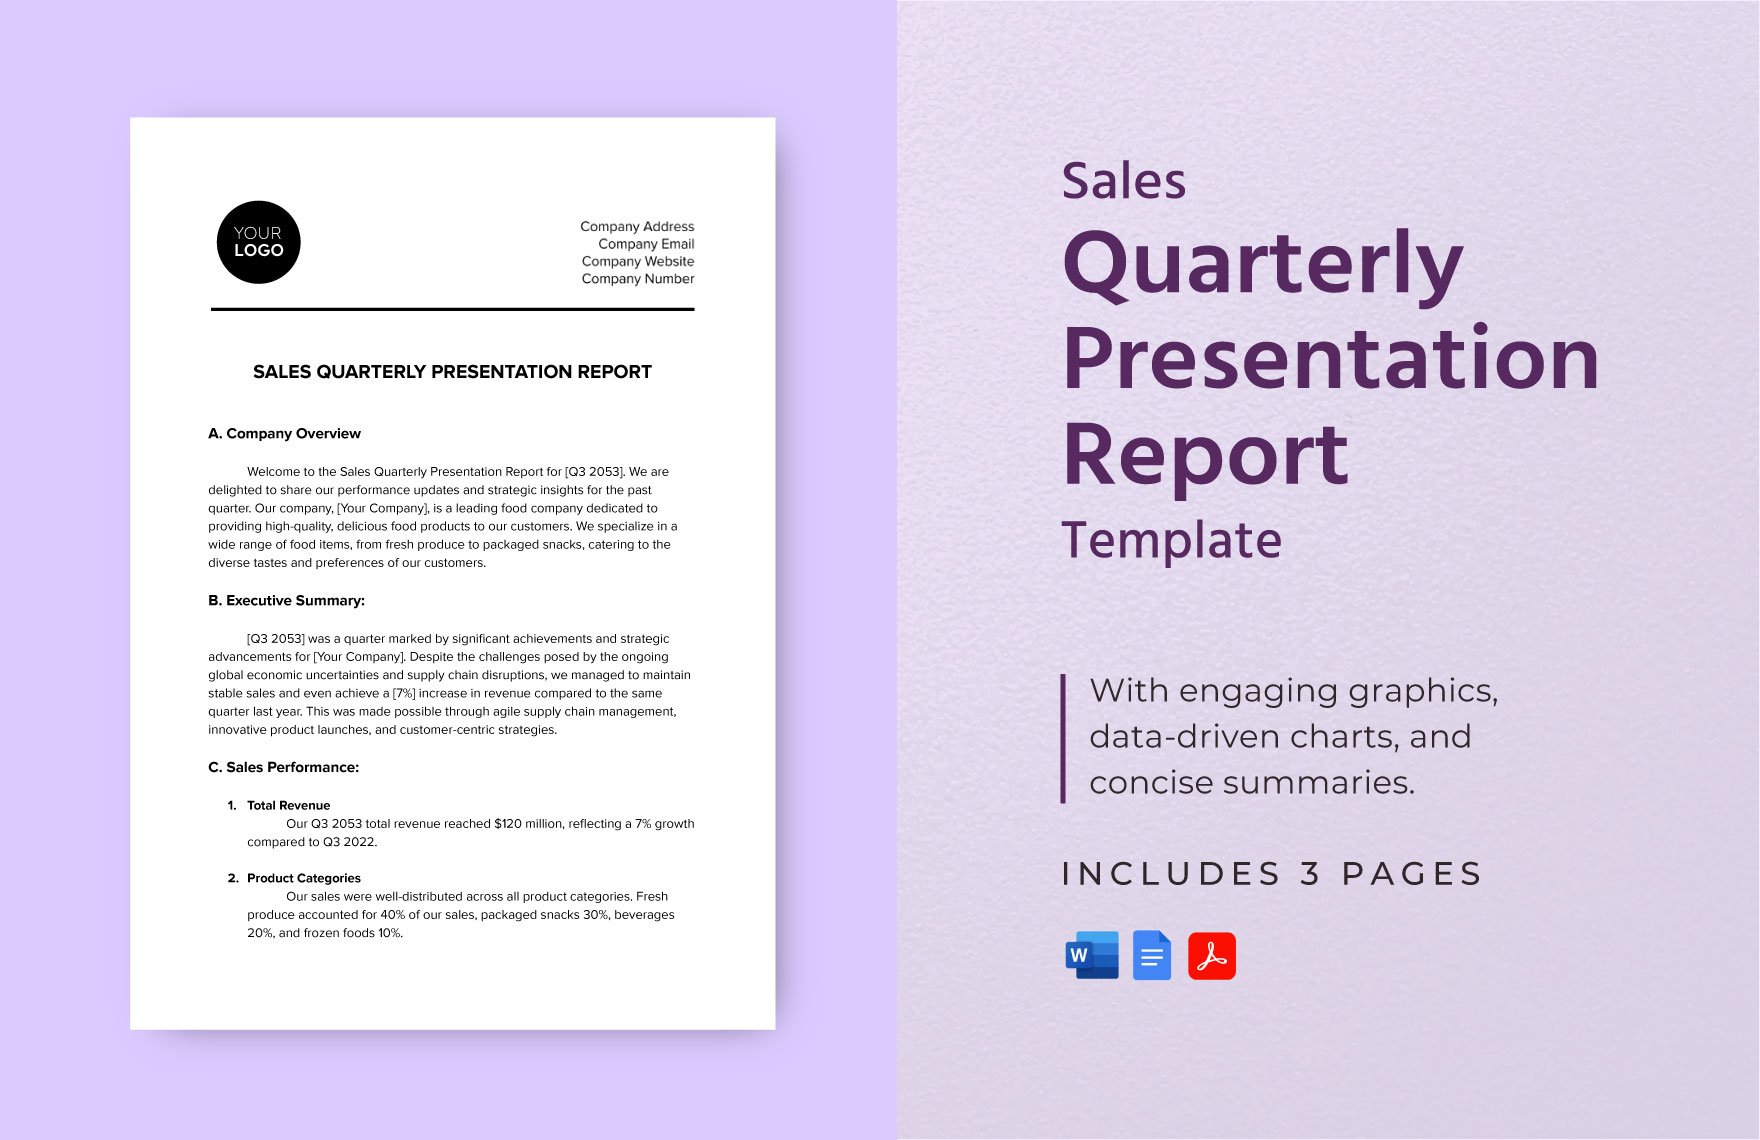 Sales Quarterly Presentation Report Template in Word, Google Docs, PDF